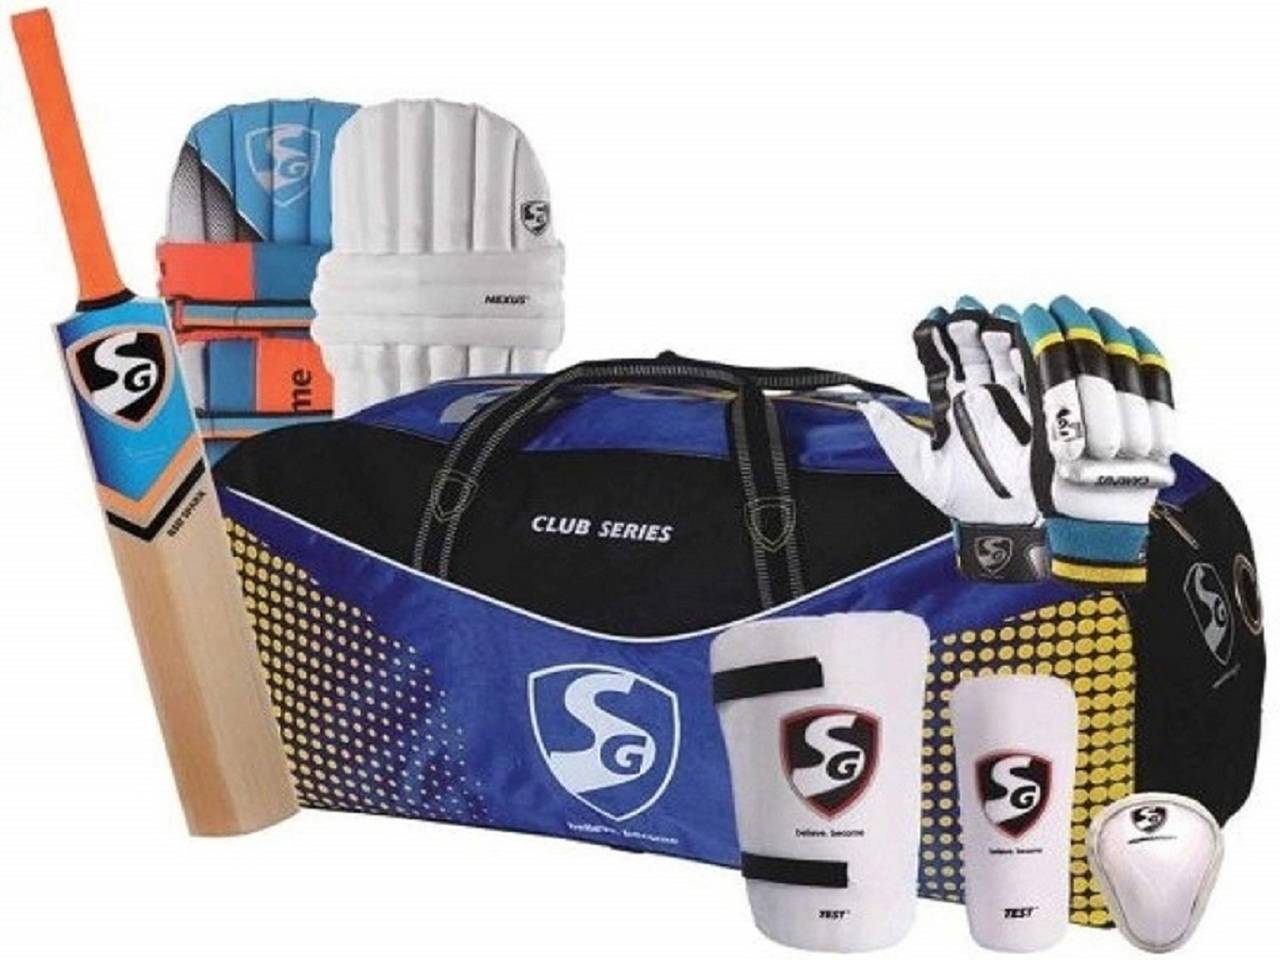 Buy SS Elite Pro Single Player Big Cricket Kit Bag | Sportsbazzar.com